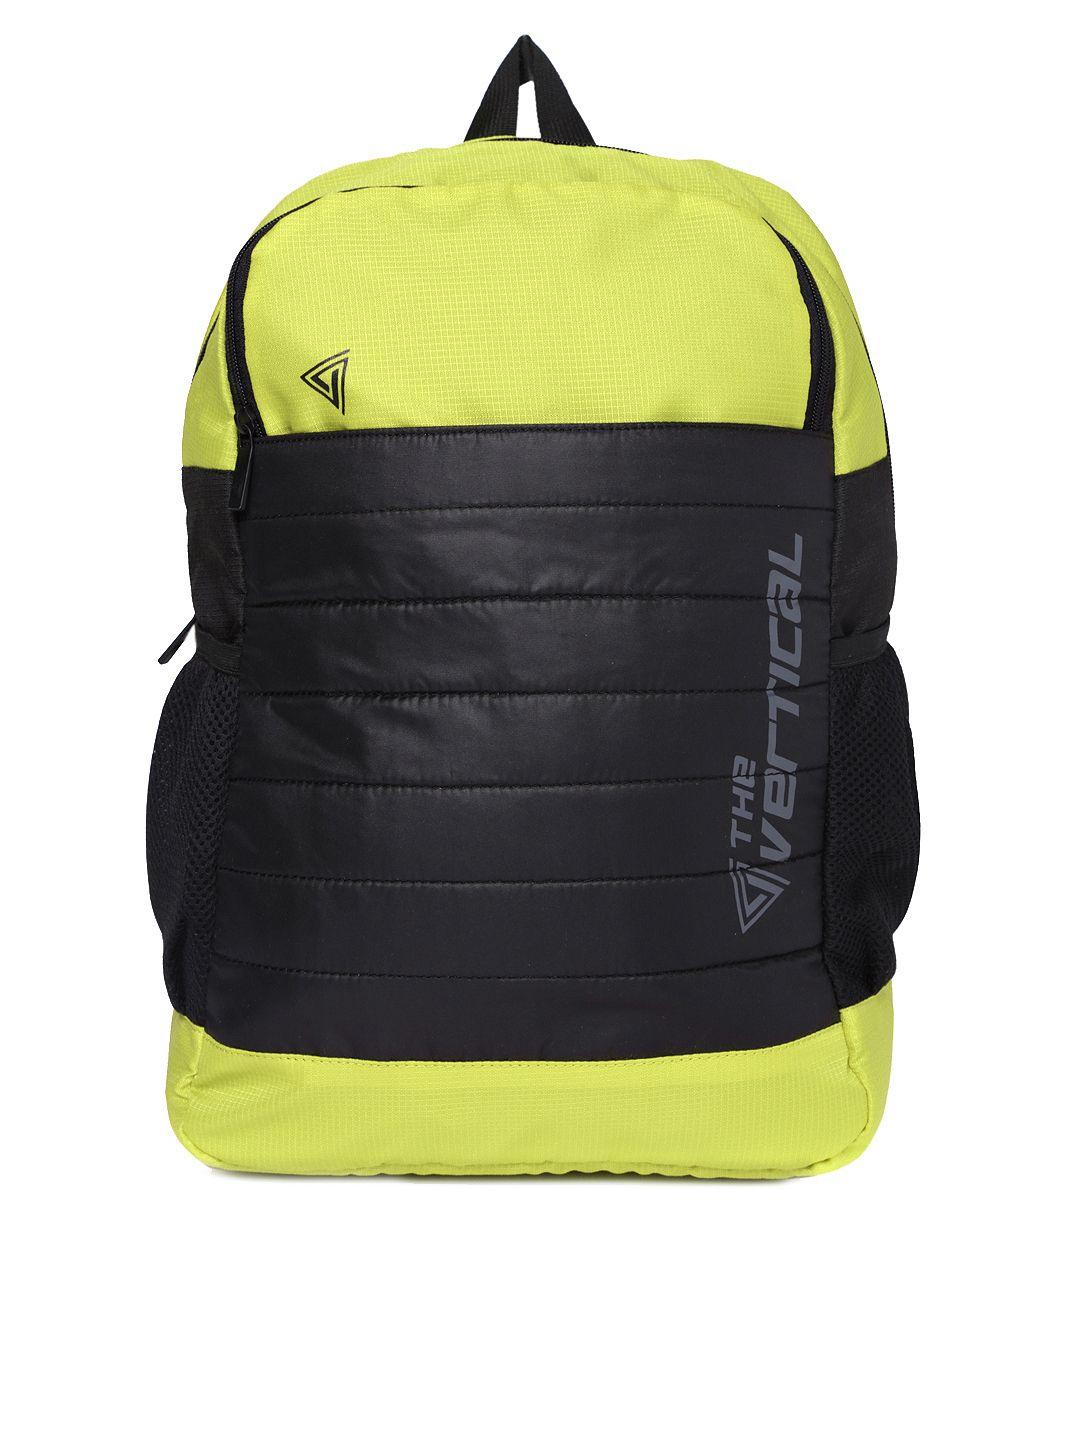 the vertical unisex lime green & black laptop backpack